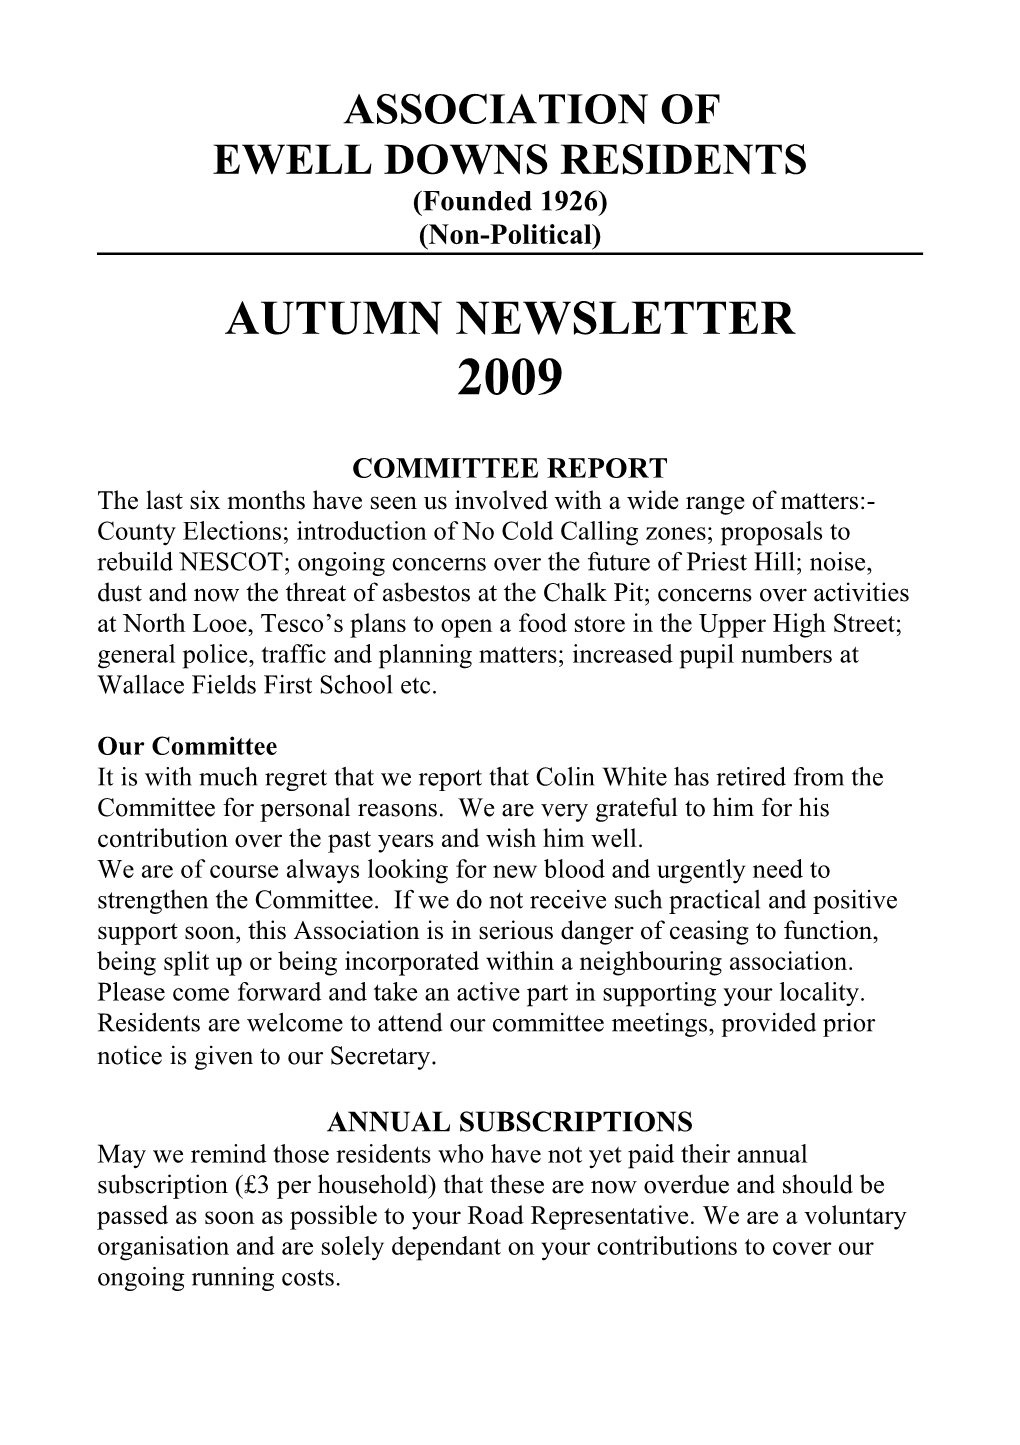 AEDR Newsletter Autumn 2009